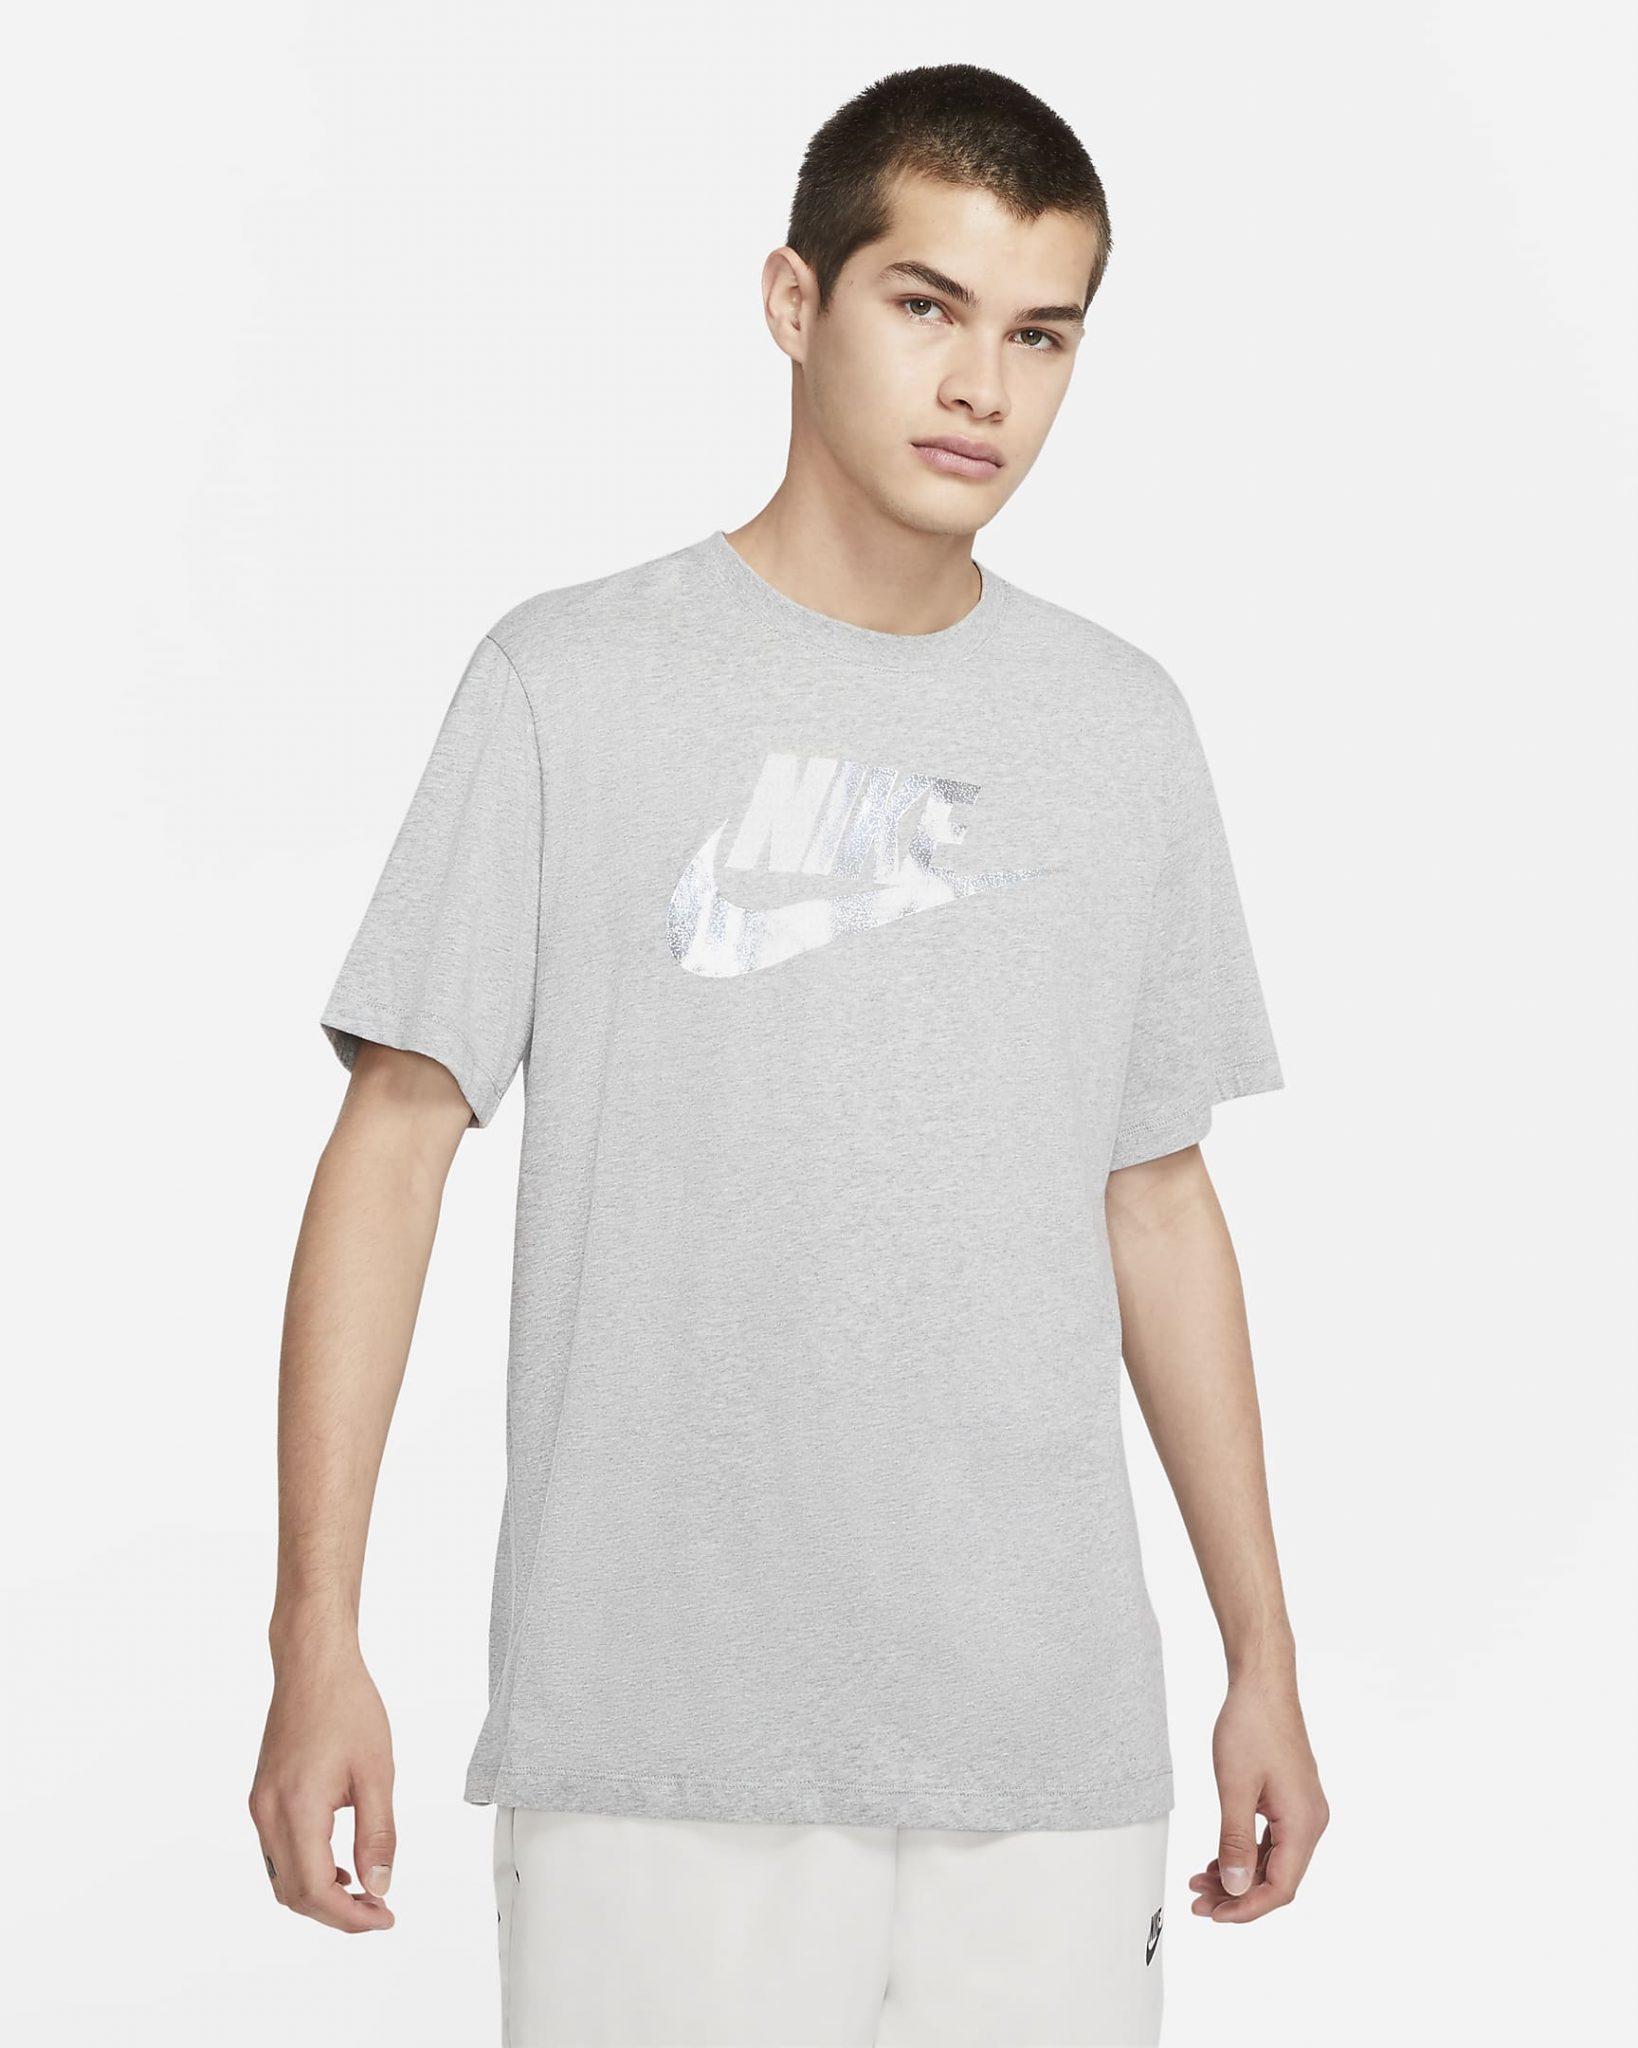 Nike Dunk High Vast Grey Shirts to Match